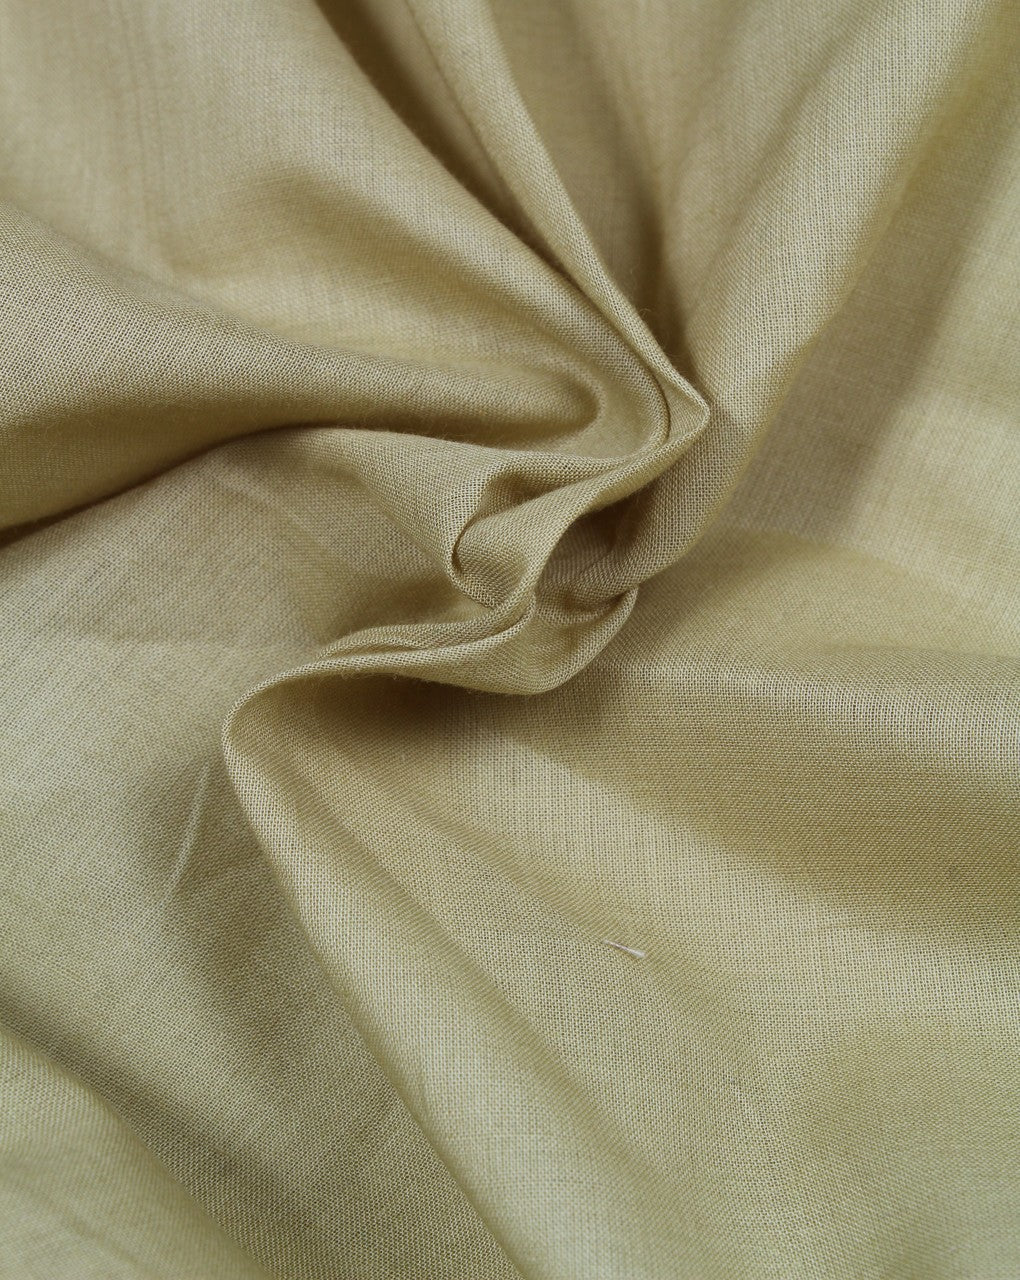 Plain Light Green Cotton Cambric Fabric